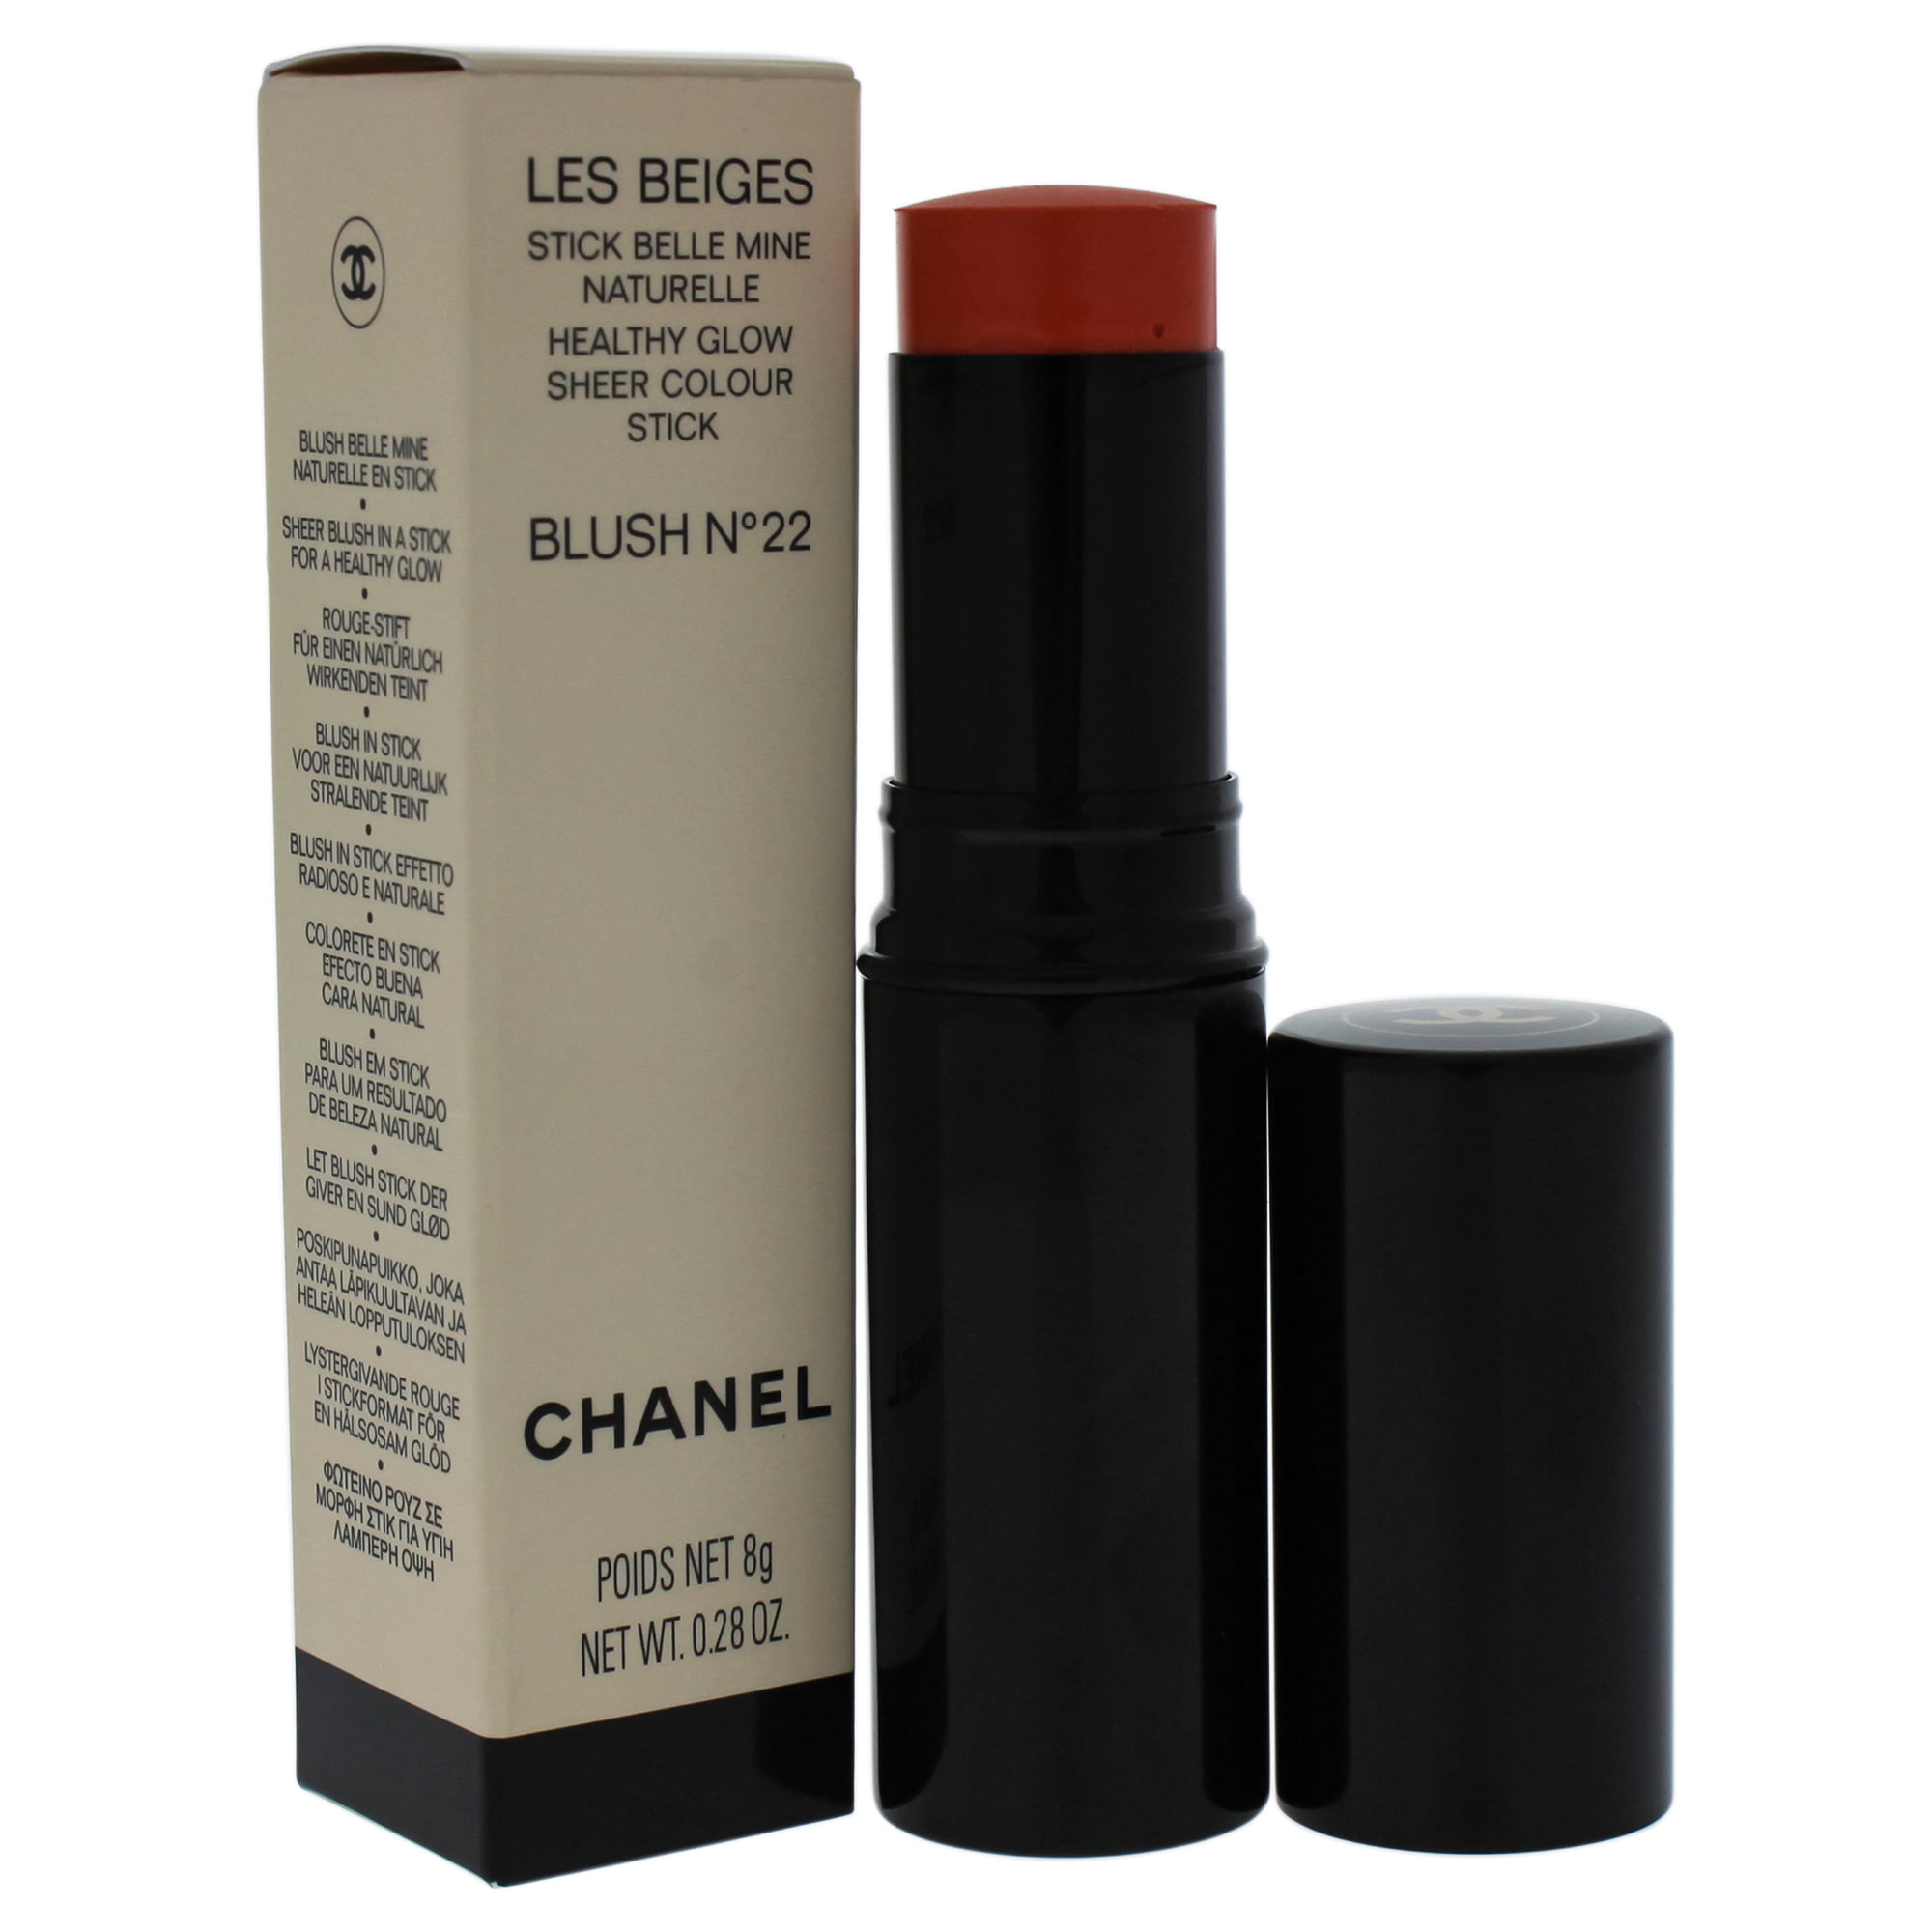 Chanel Les Beiges Healthy Glow Sheer Colour Stick Blush - No. 22 0.28 oz  Blush 